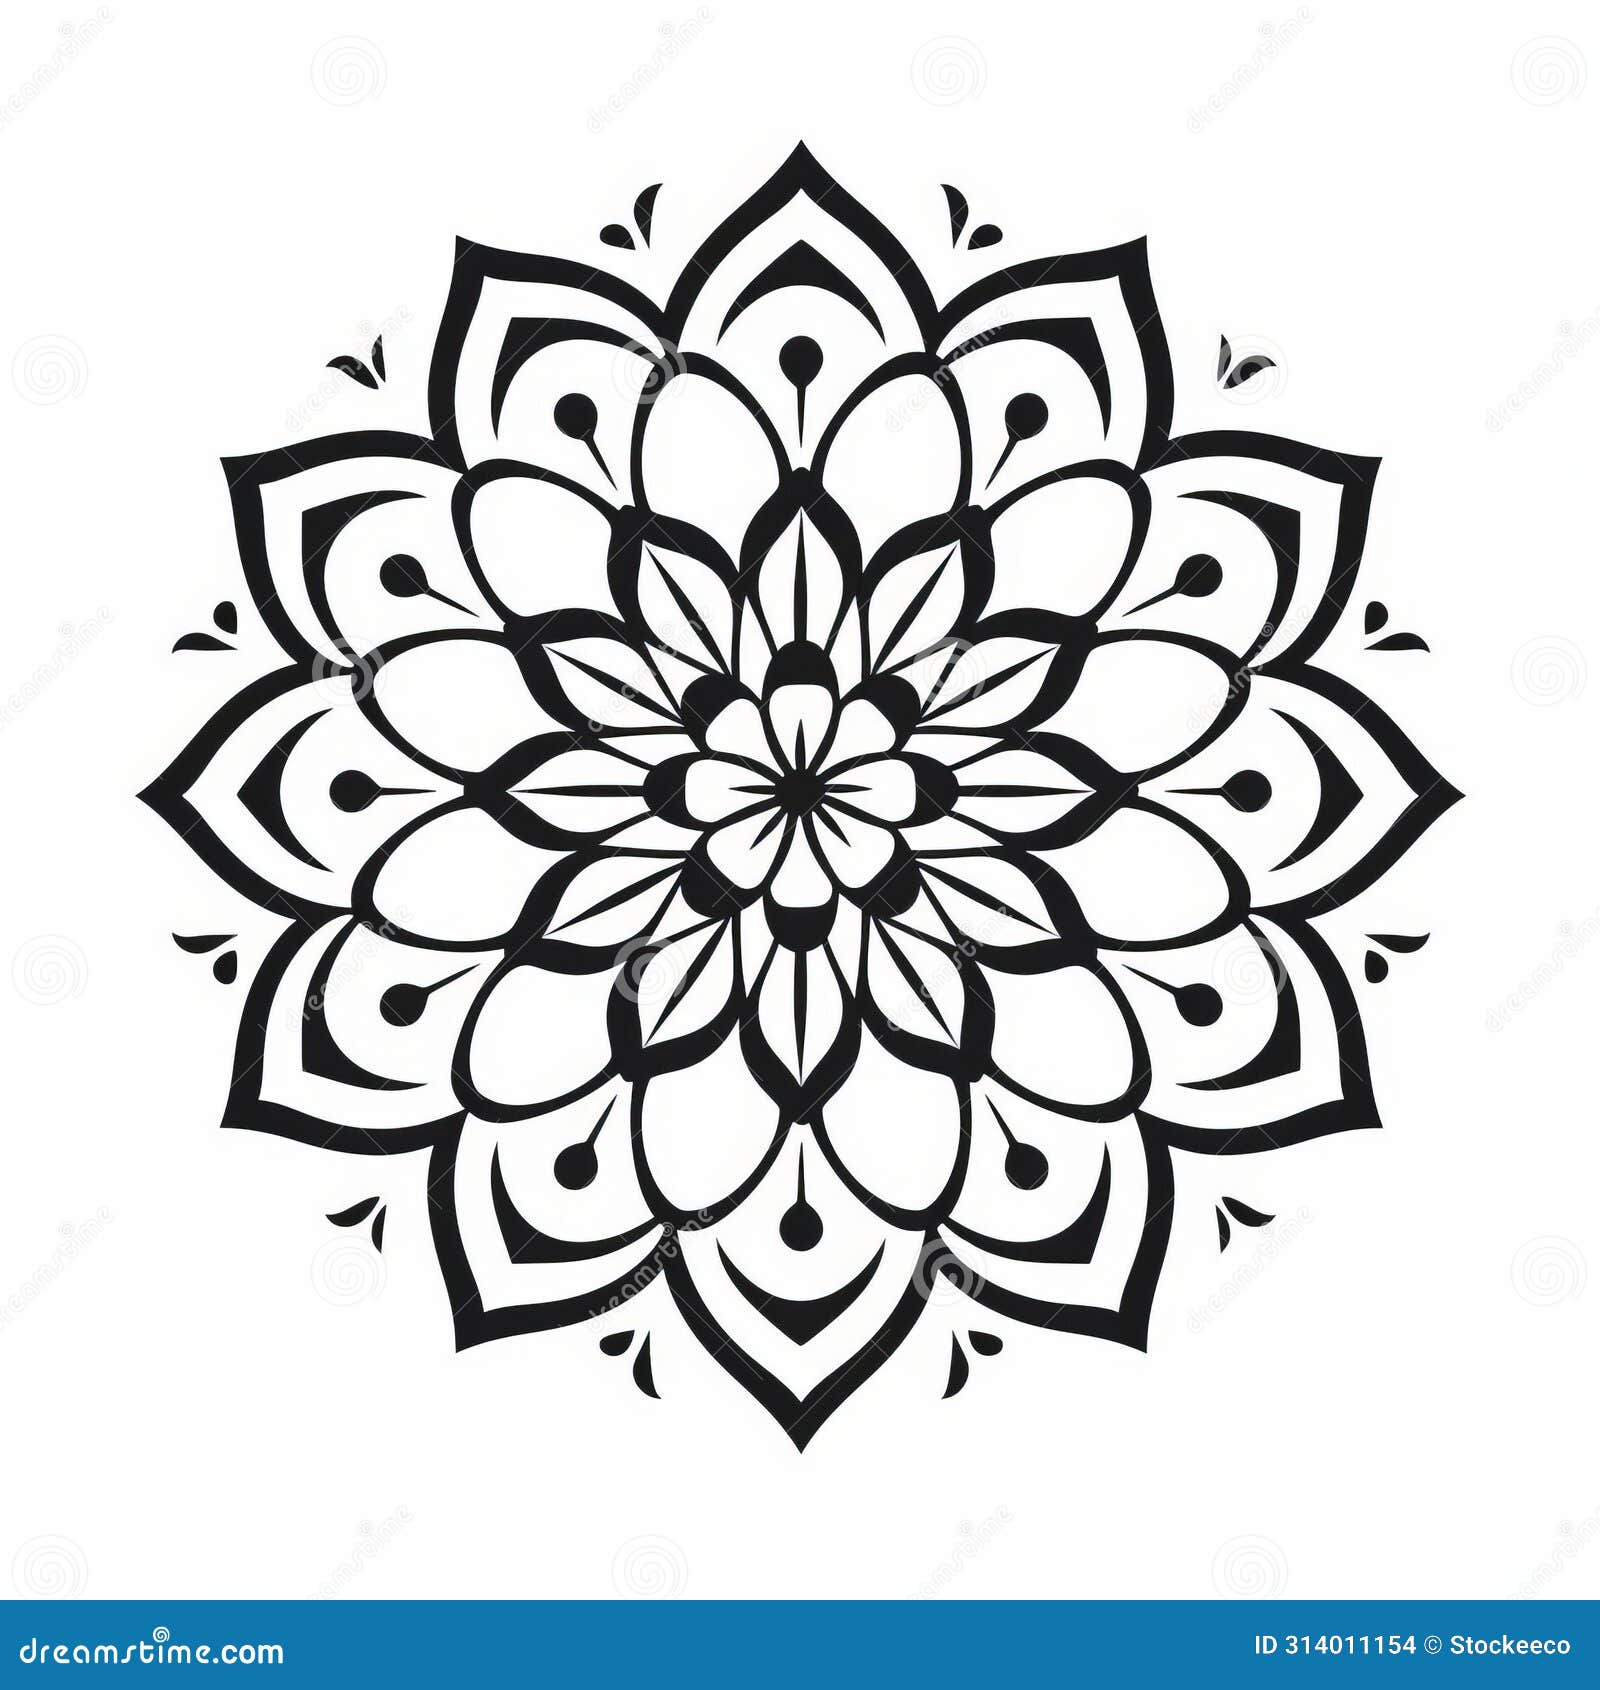 minimalistic mandalas mujer icon pattern on white background